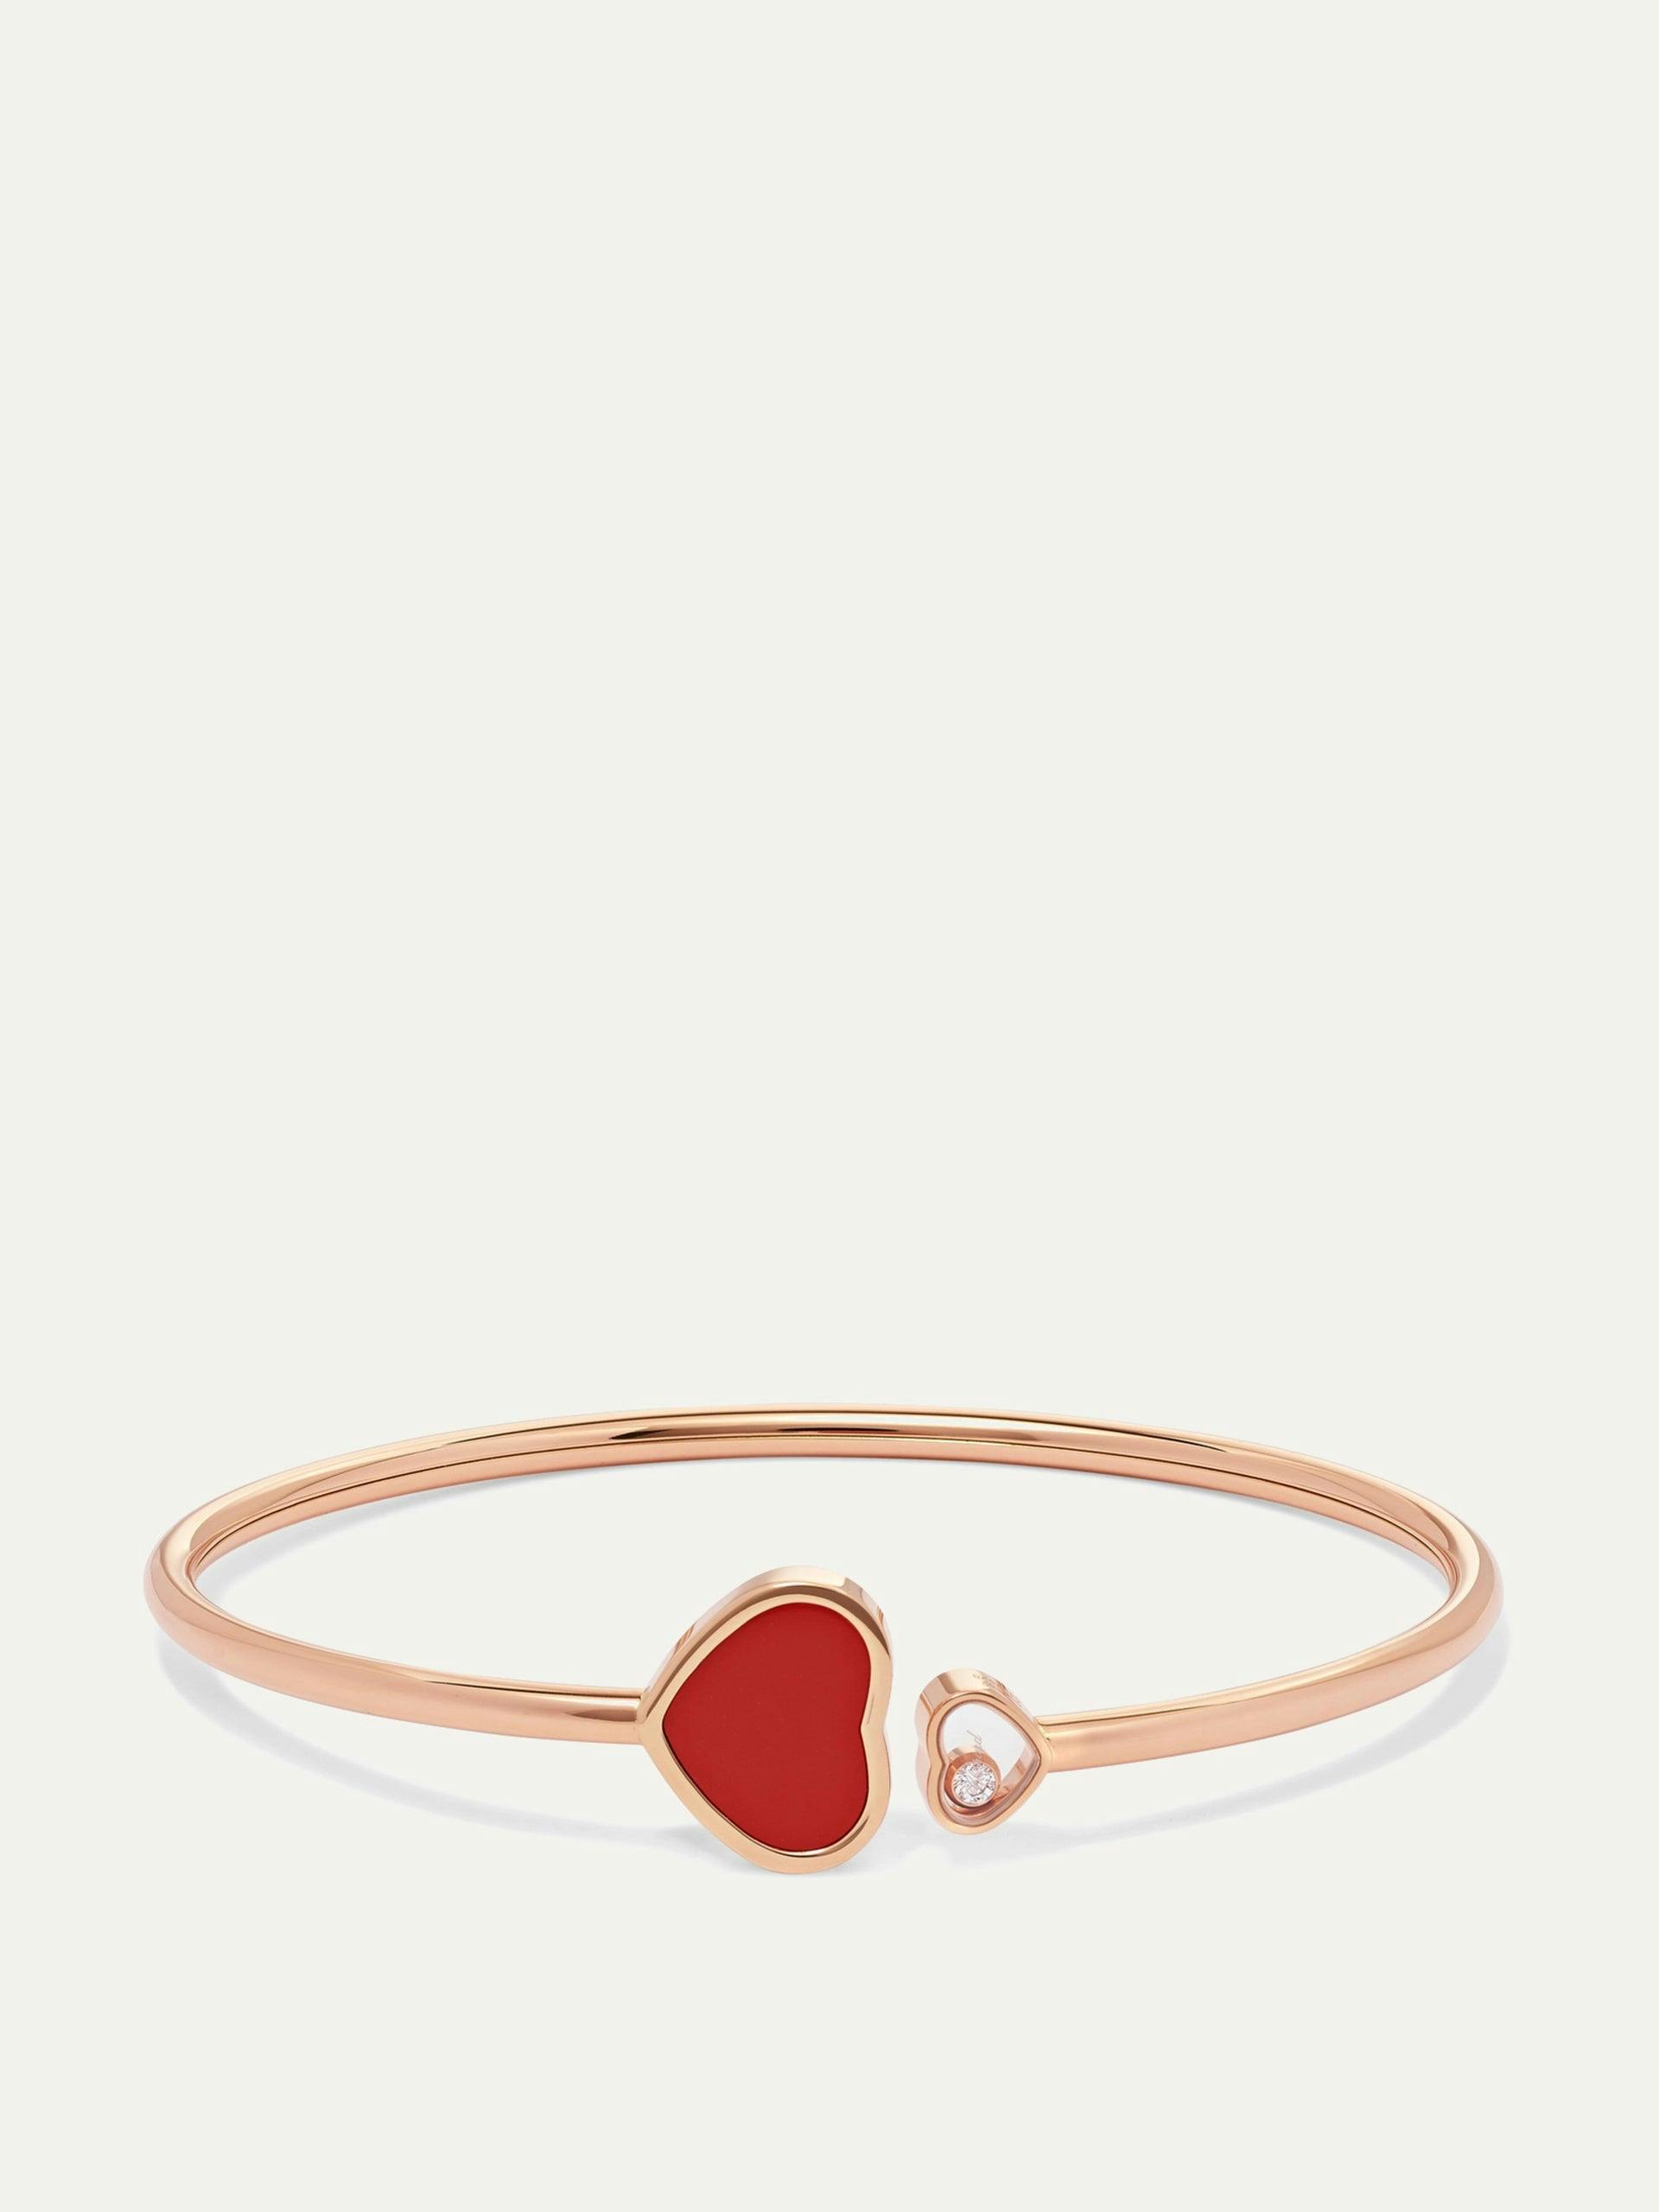 Happy Hearts 18-karat rose gold, diamond and red stone cuff